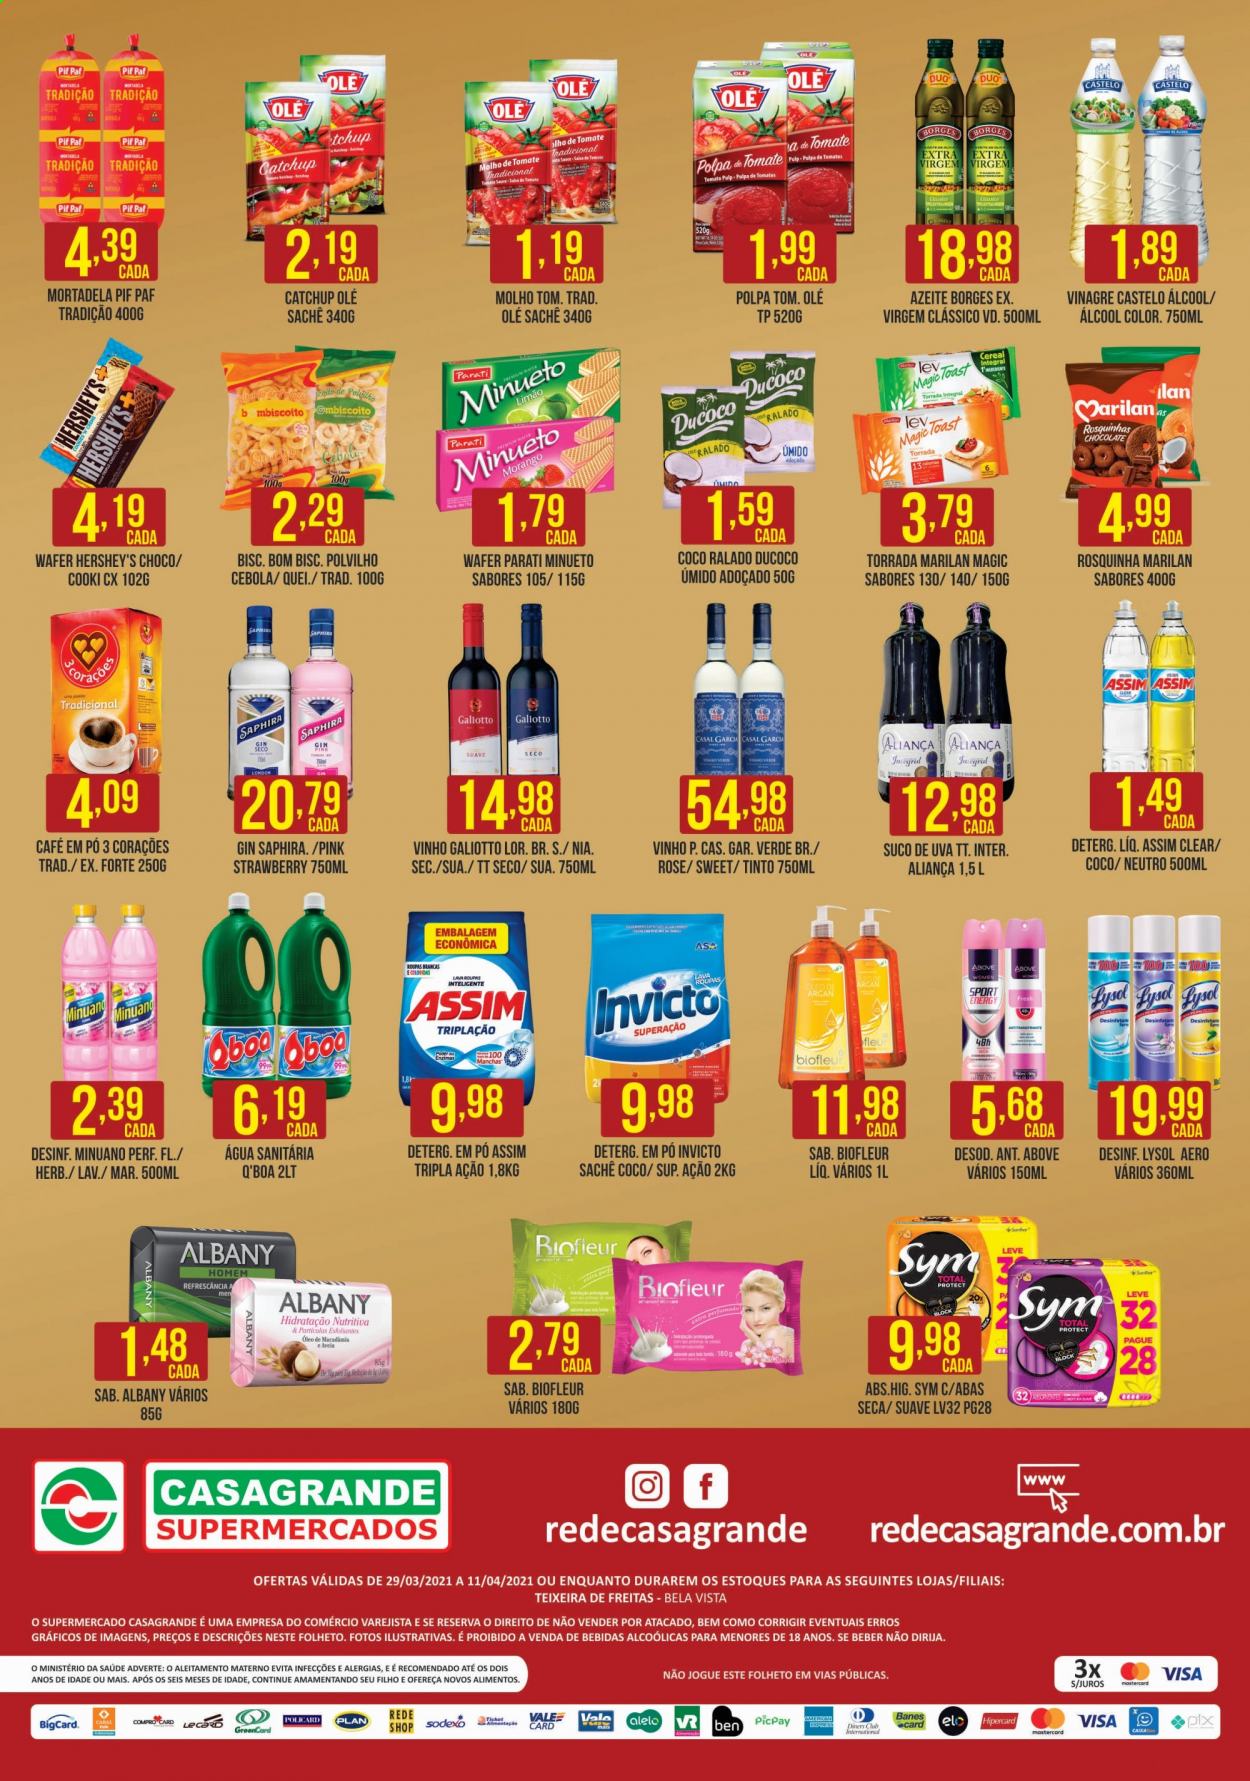 Encarte Casagrande Supermercados  - 29.03.2021 - 11.04.2021.